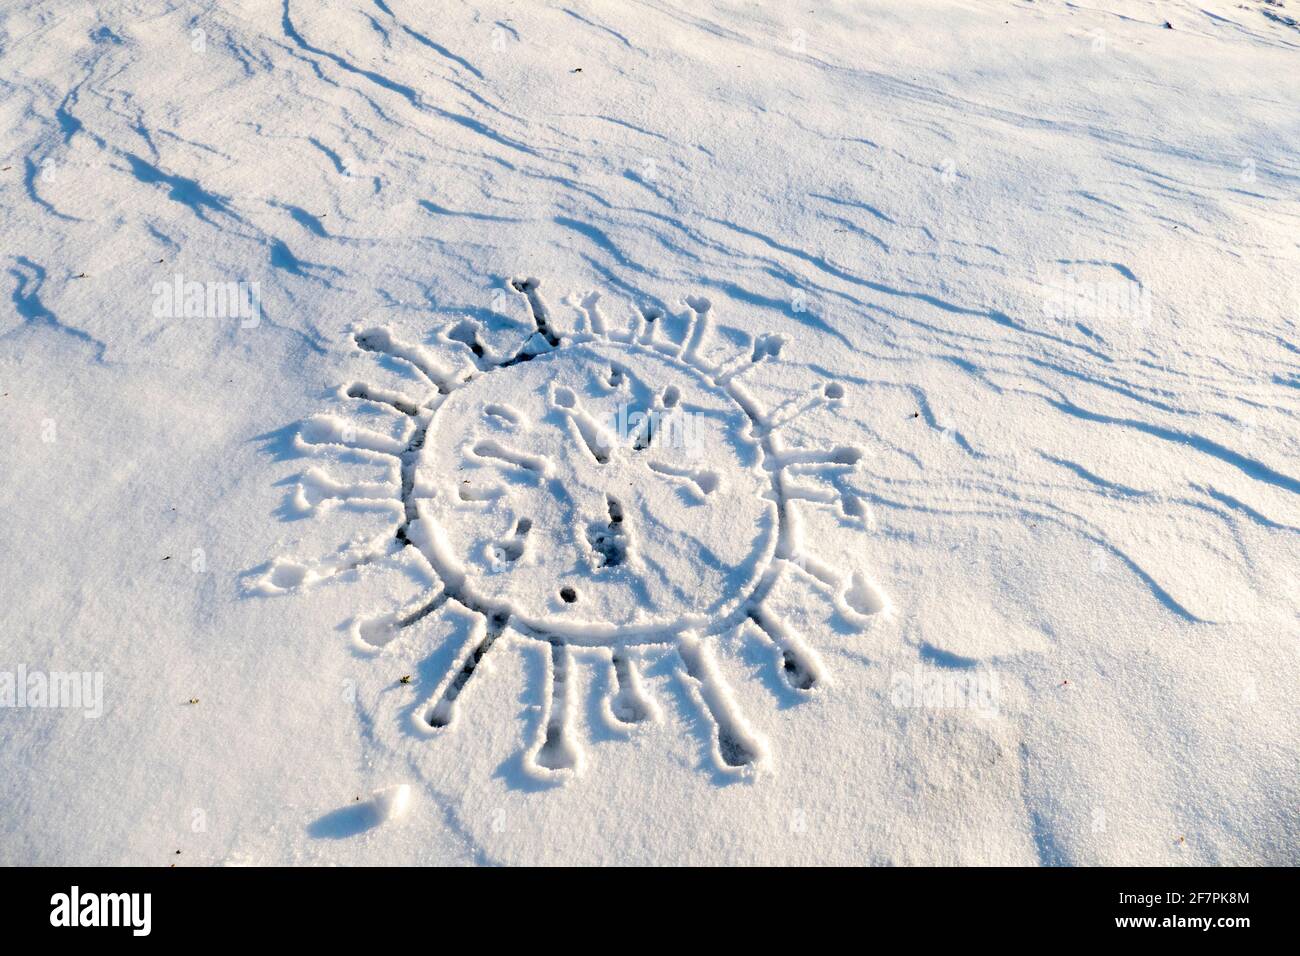 Corona, virus Covid-19 dans den Schnee gemalt Banque D'Images